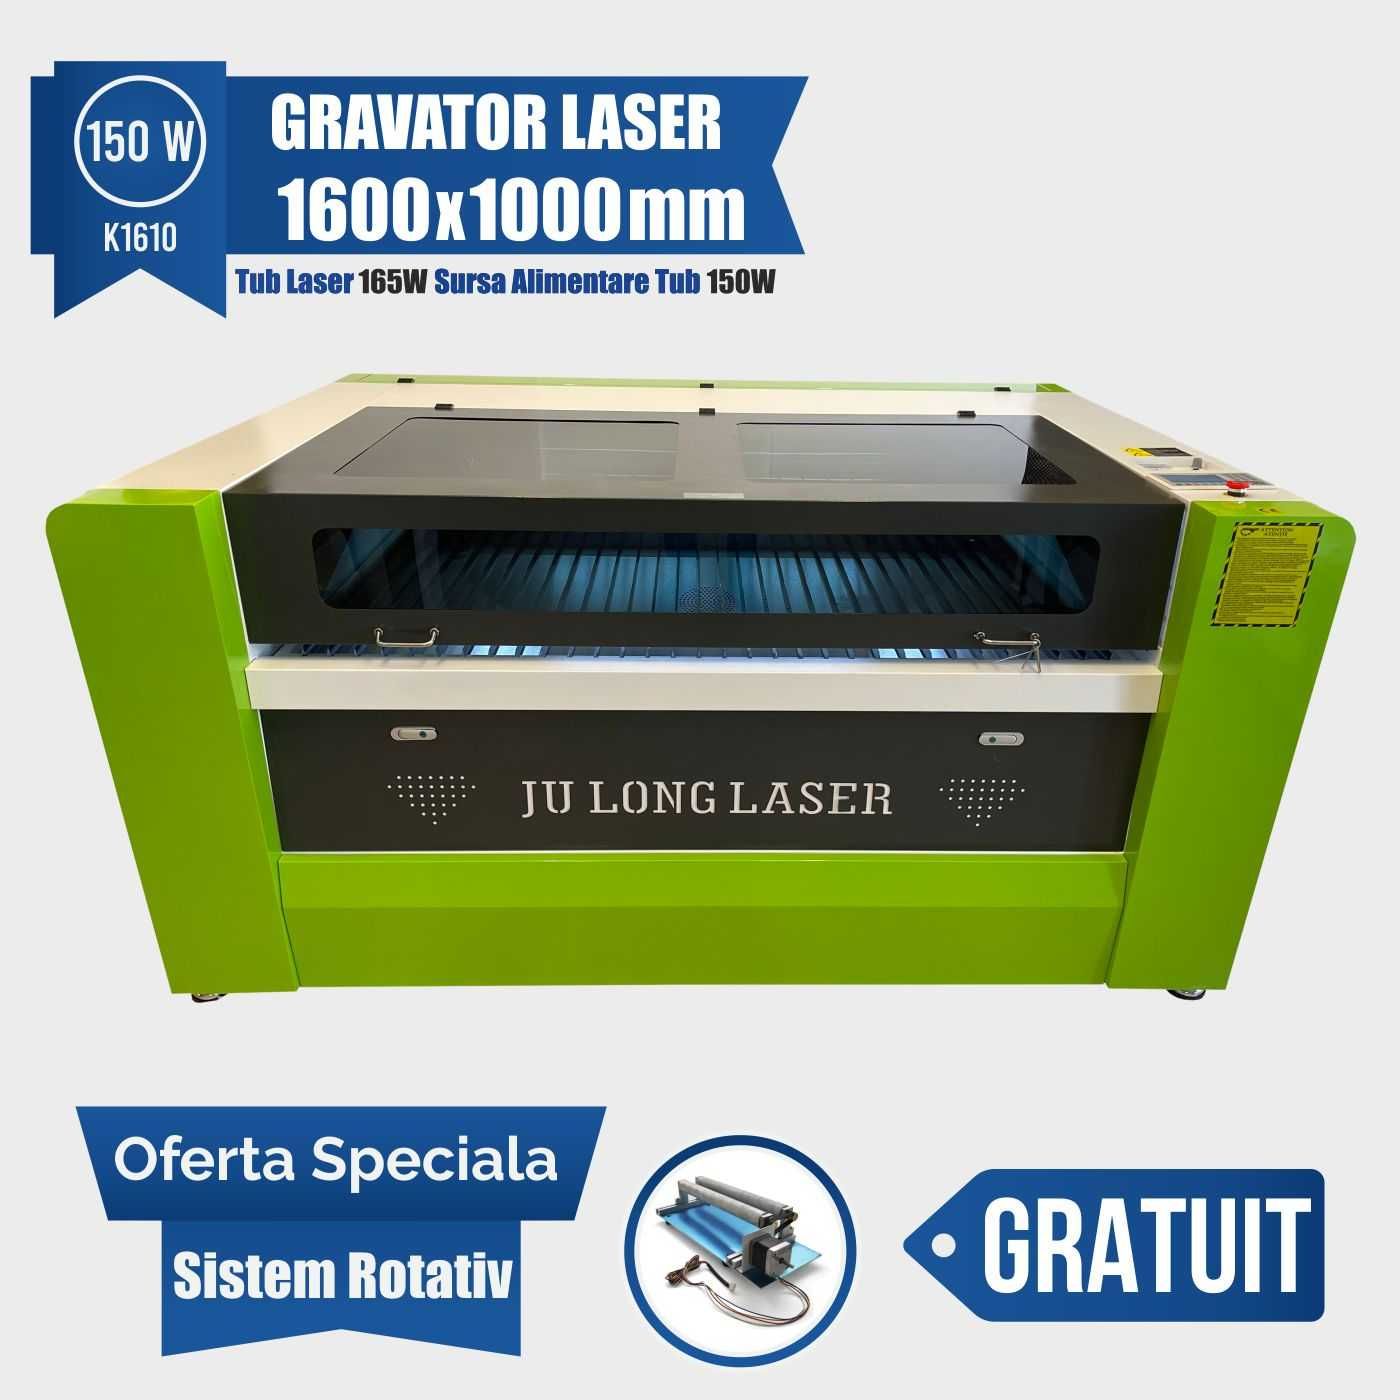 Gravator Laser K1610, Putere 150W, Controler RUIDA 1600x1000 mmm